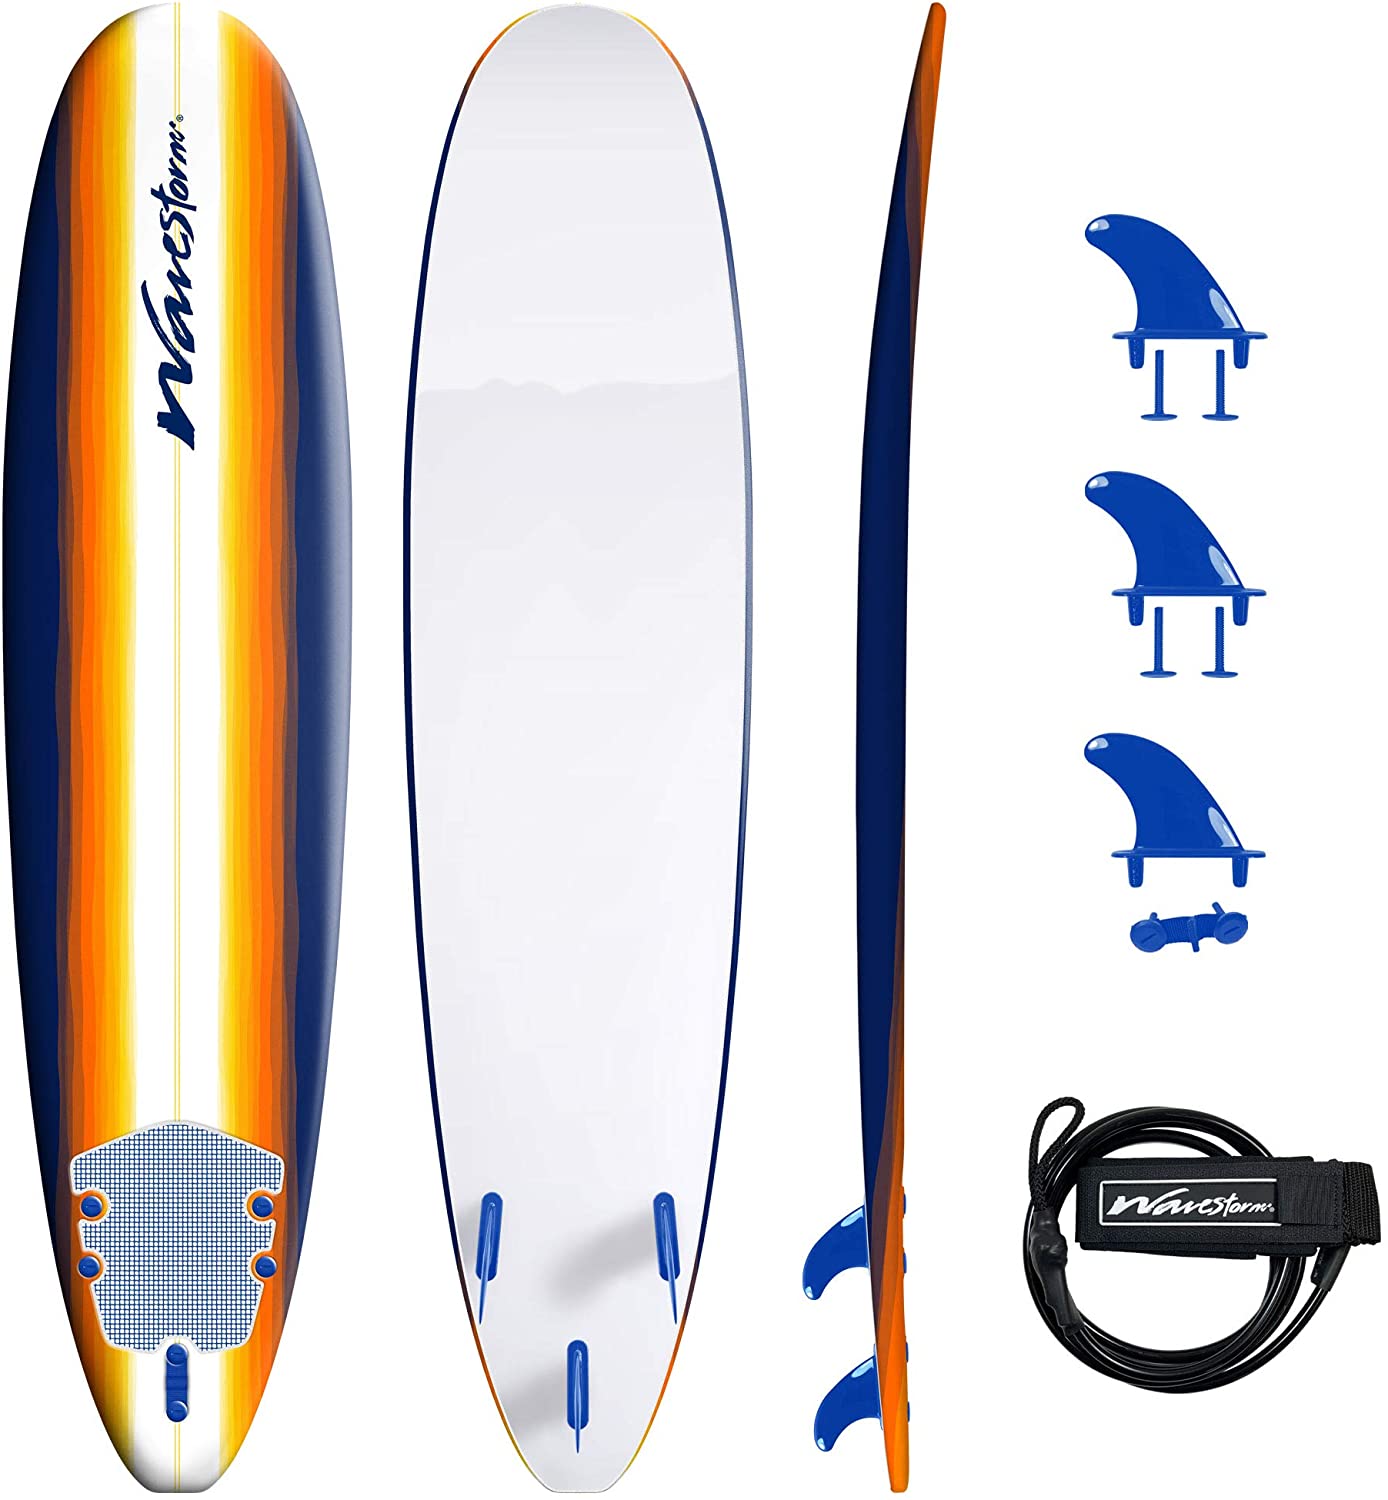 Wavestorm 8-Foot Sunburst Graphic Surfboard